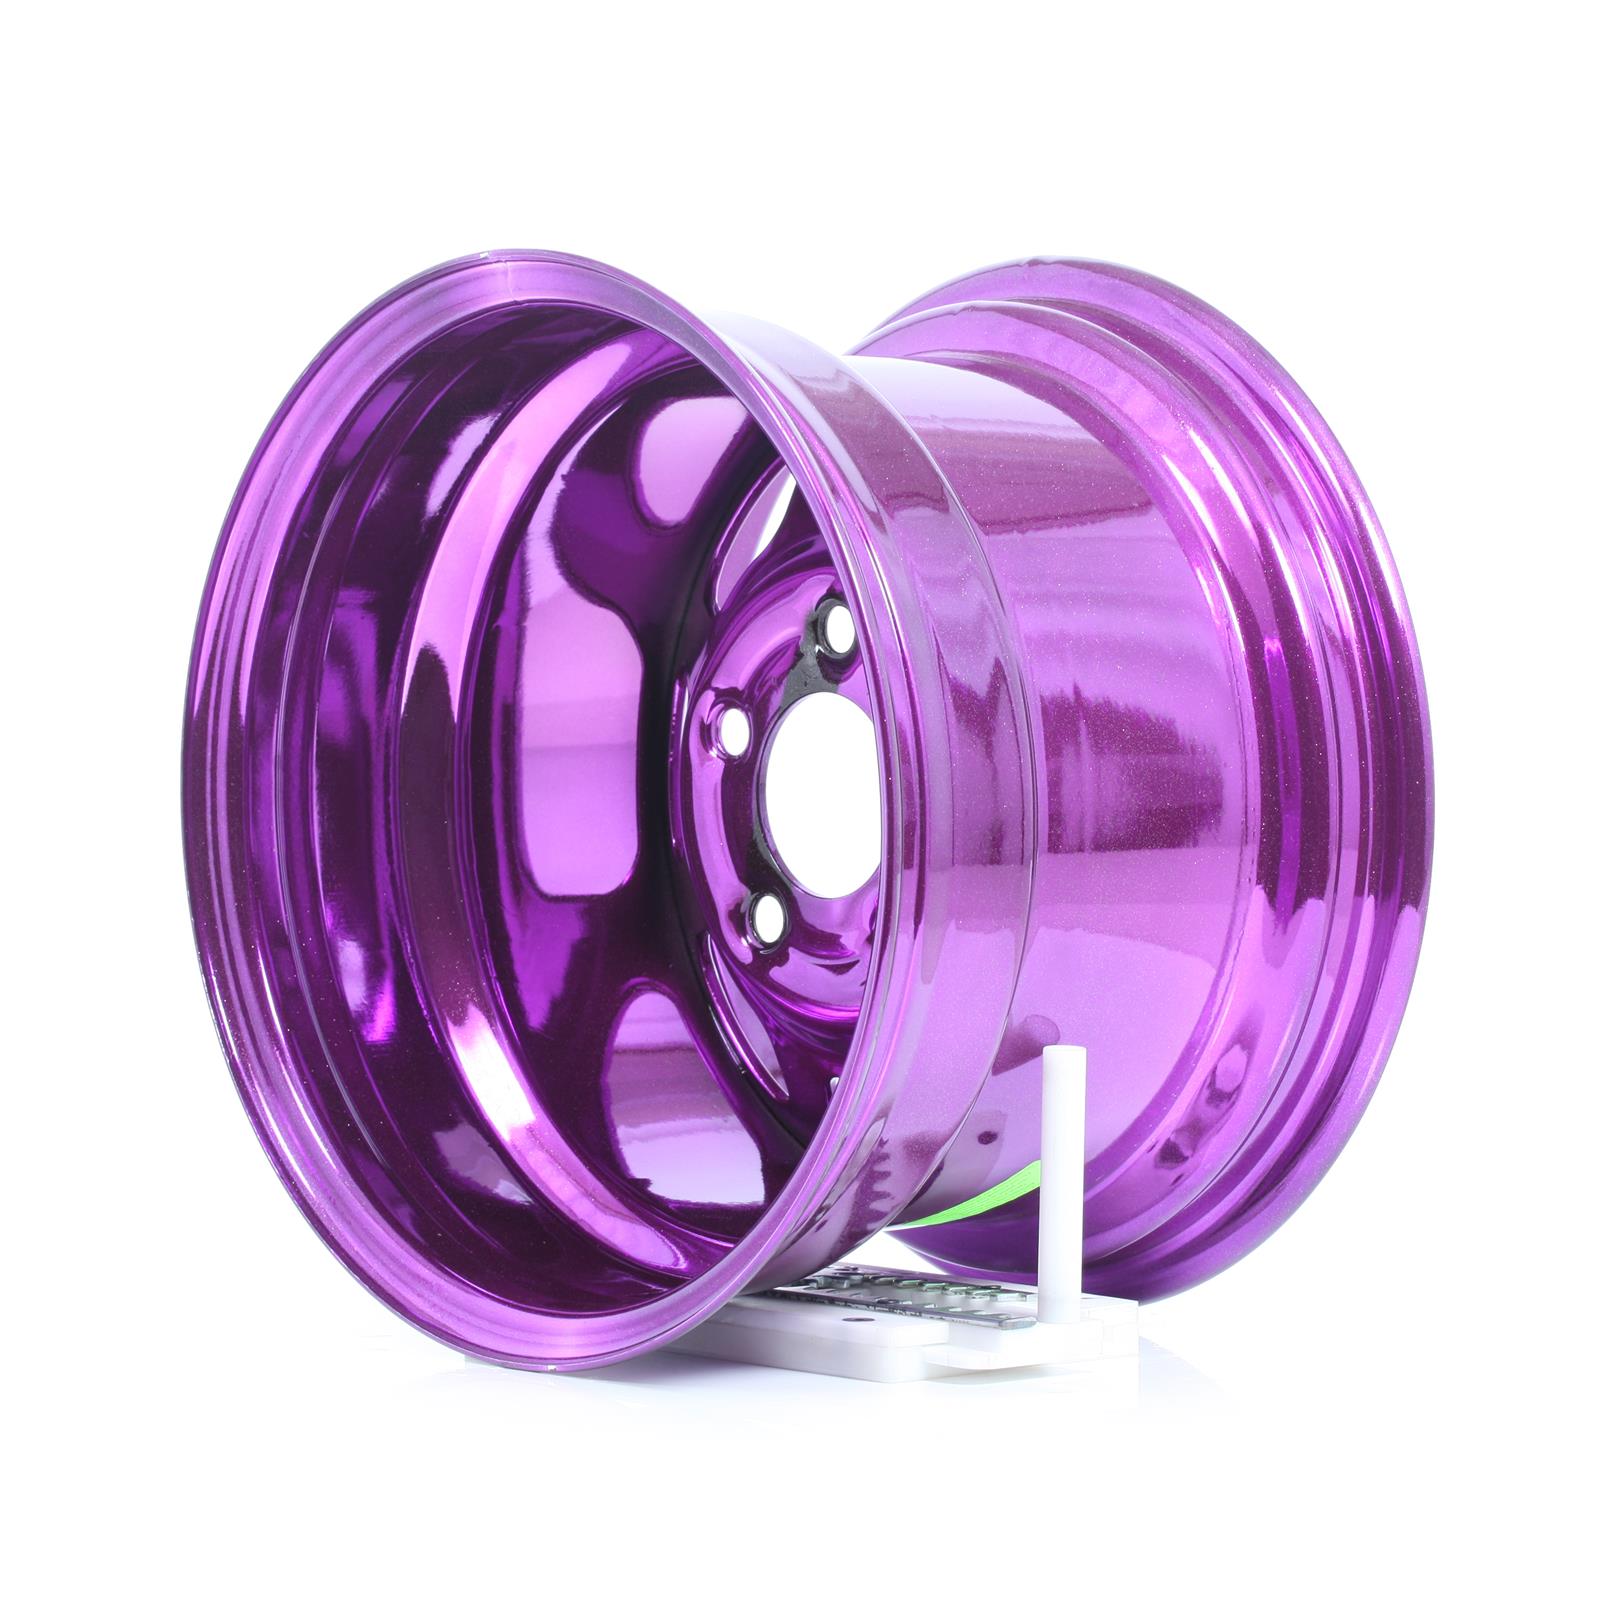 Aero Race Wheels Pur Aero Series Aerobrite Purple Chrome Roll Formed Race Wheels